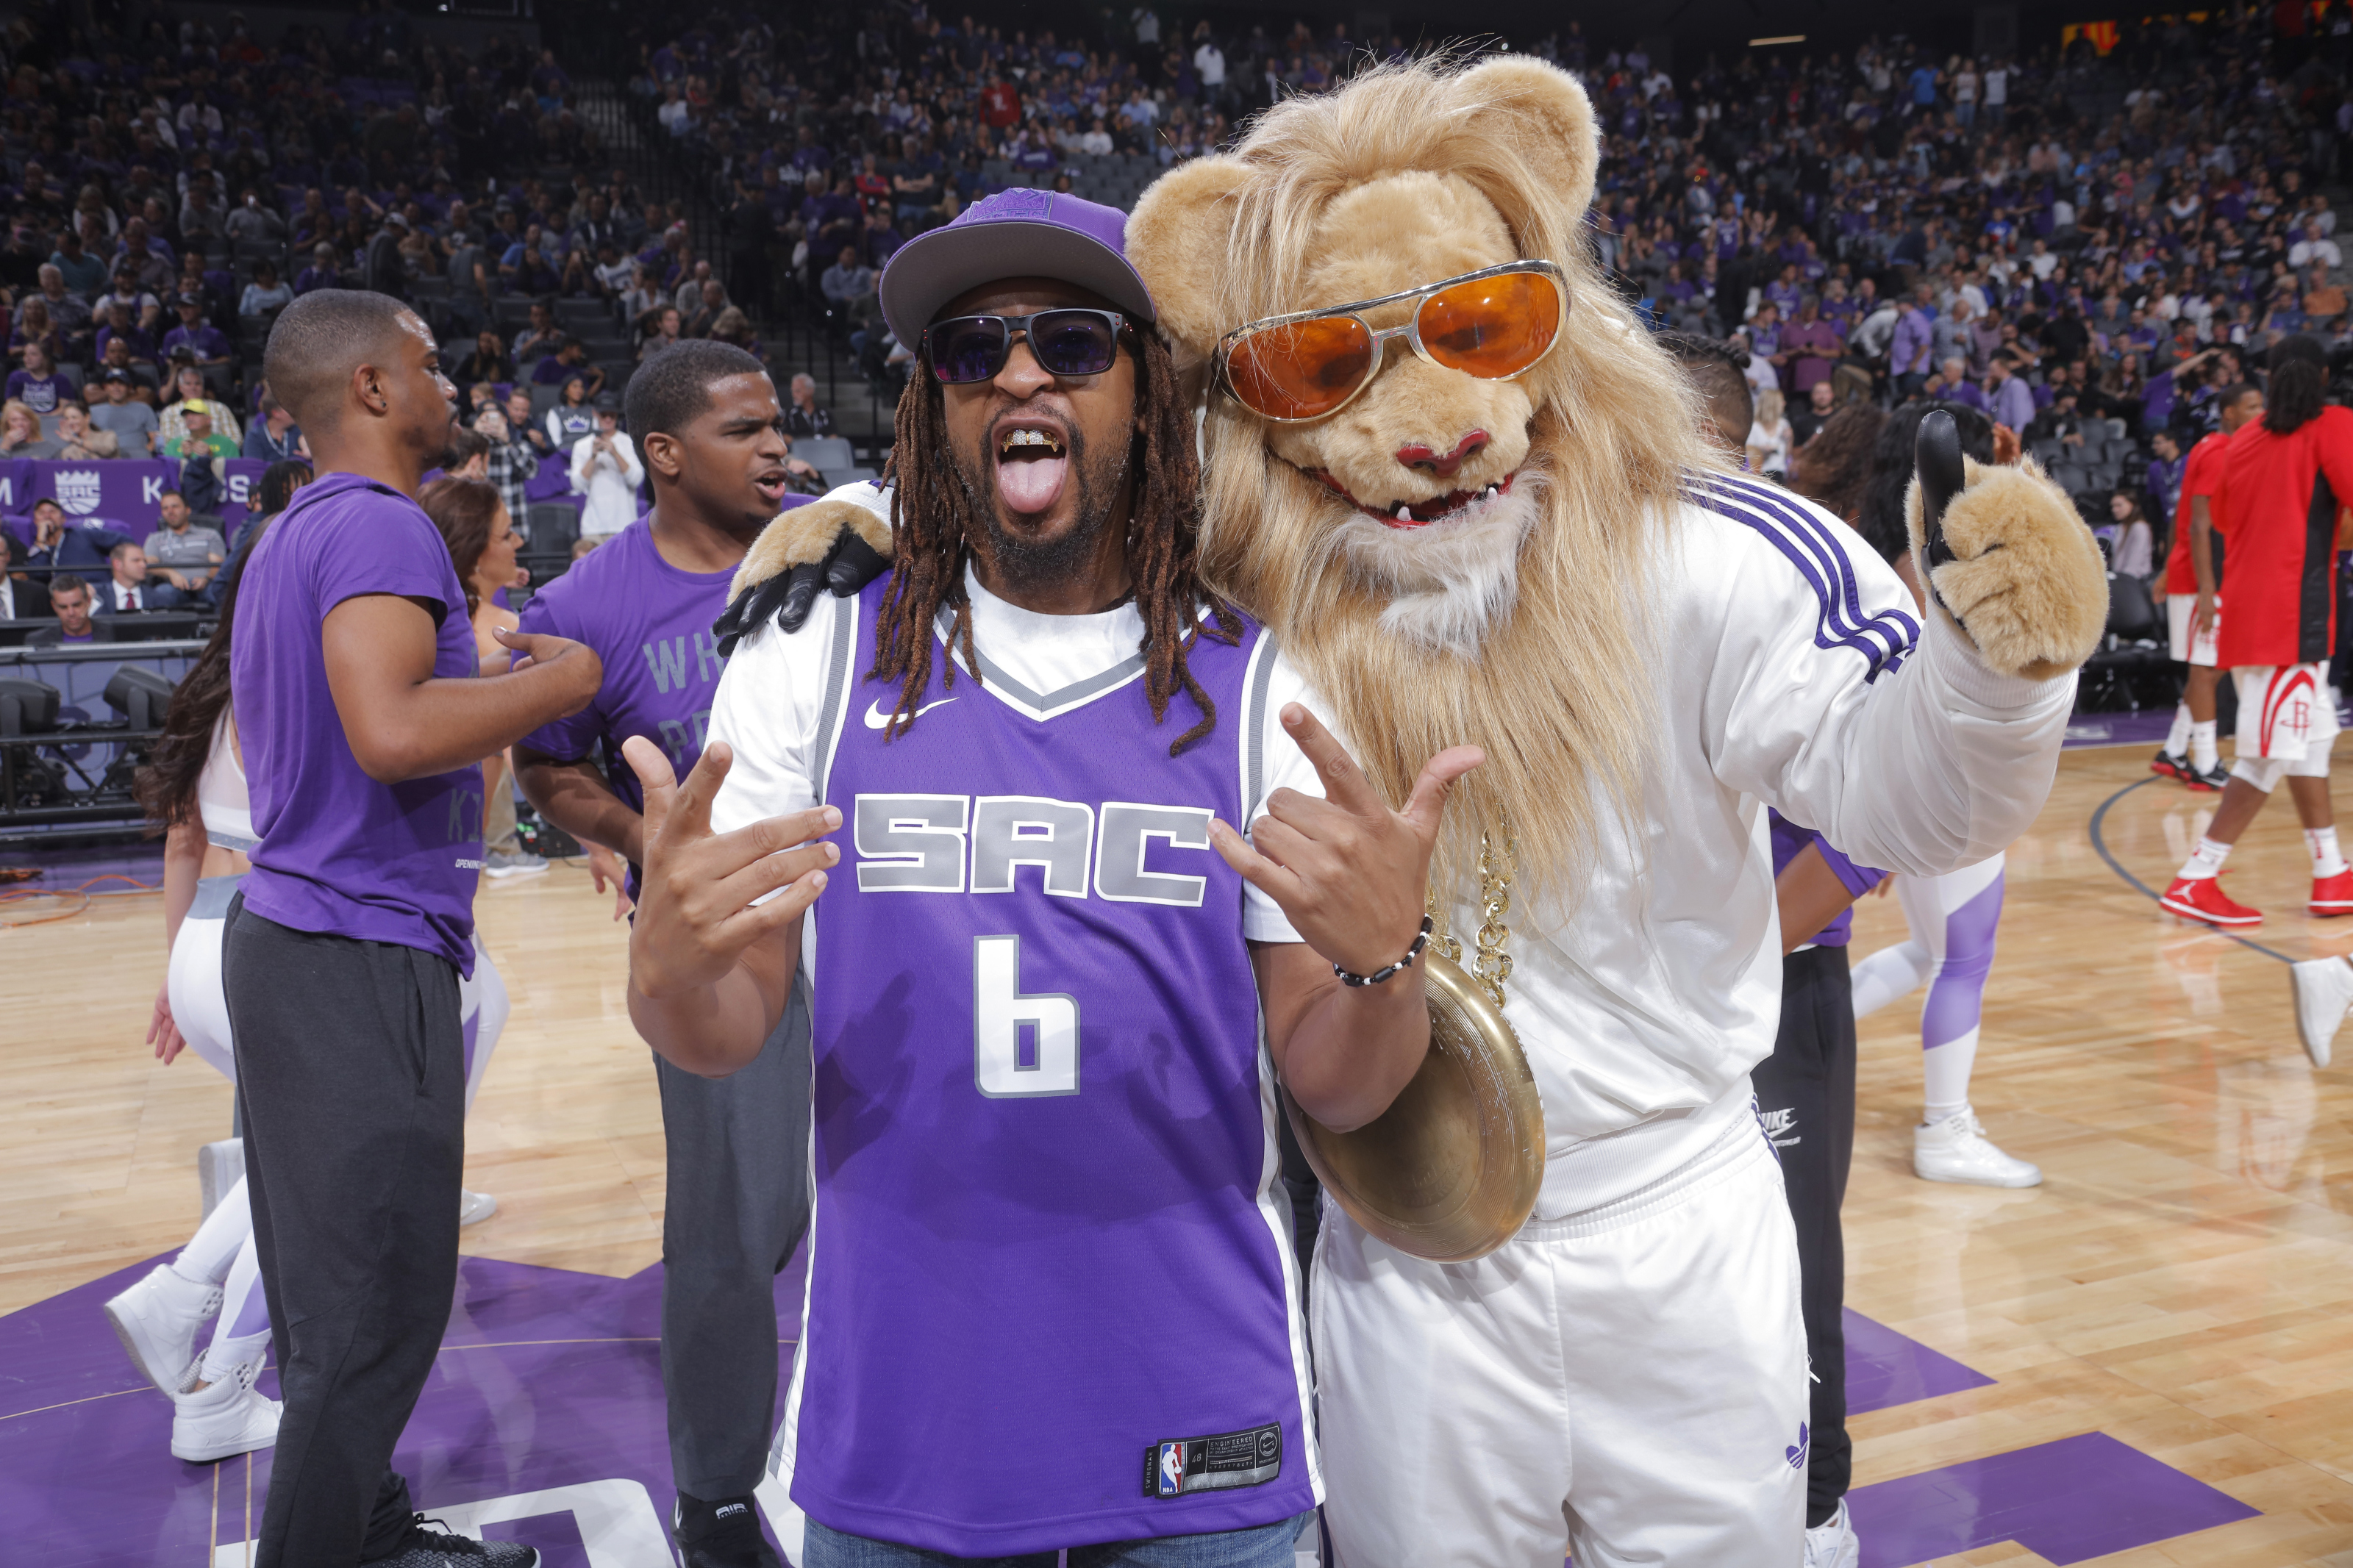 Sacramento Kings: Lil Jon to play concert at California Classic